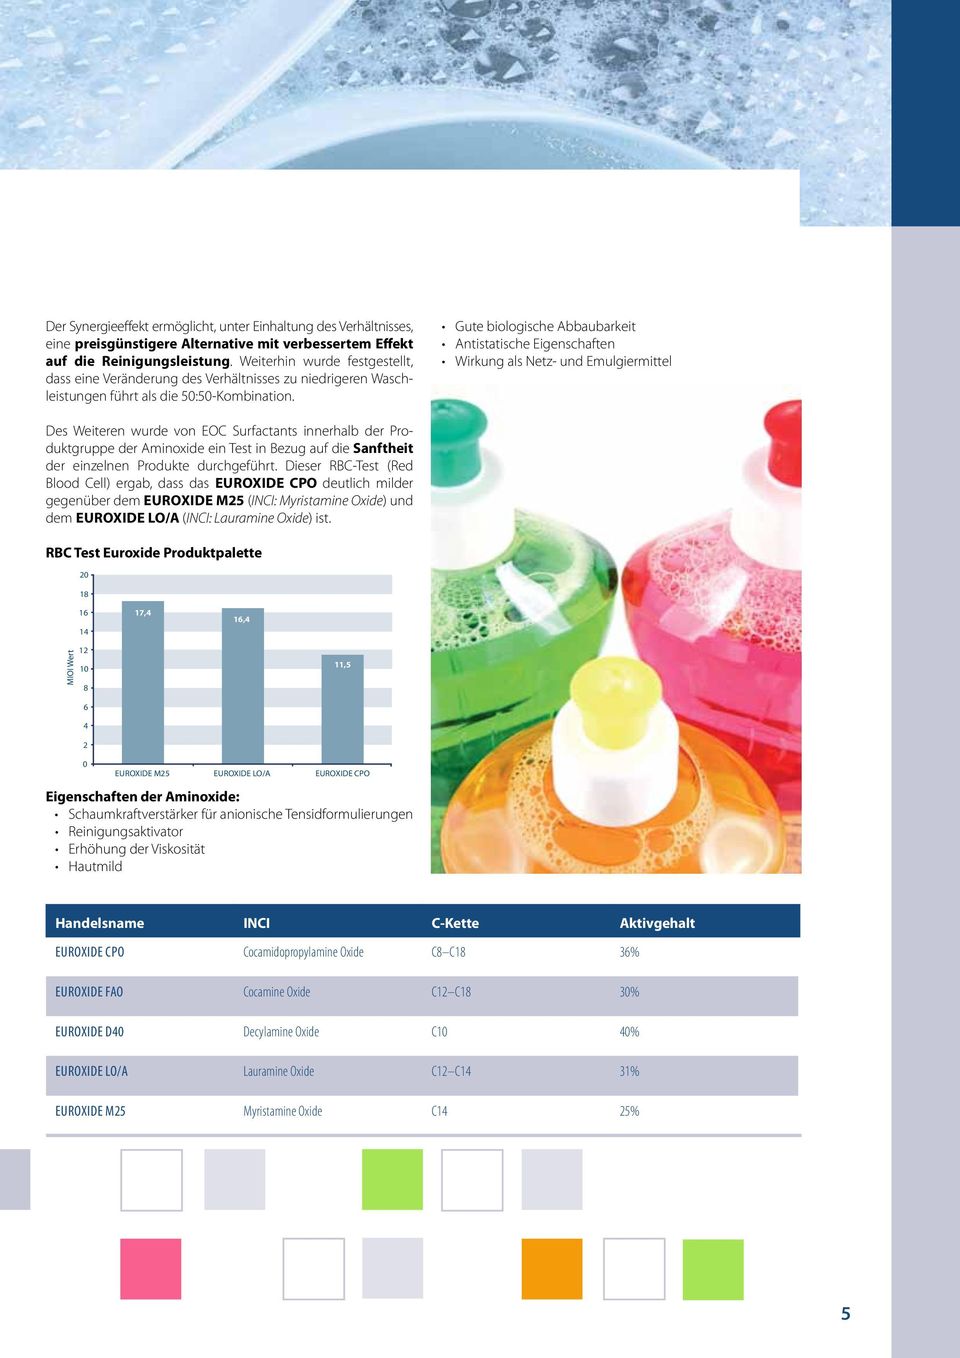 2/7 EUROXIDE CPO/ / EUROXIDE CPO/ 7/2 EUROXIDE CPO/ Des Weiteren EUROQUAT wurde HCB LAvon EOC EUROQUAT Surfactants HCB LA innerhalb EUROQUAT HCB der LA Produktgruppe der Aminoxide ein Test in Bezug